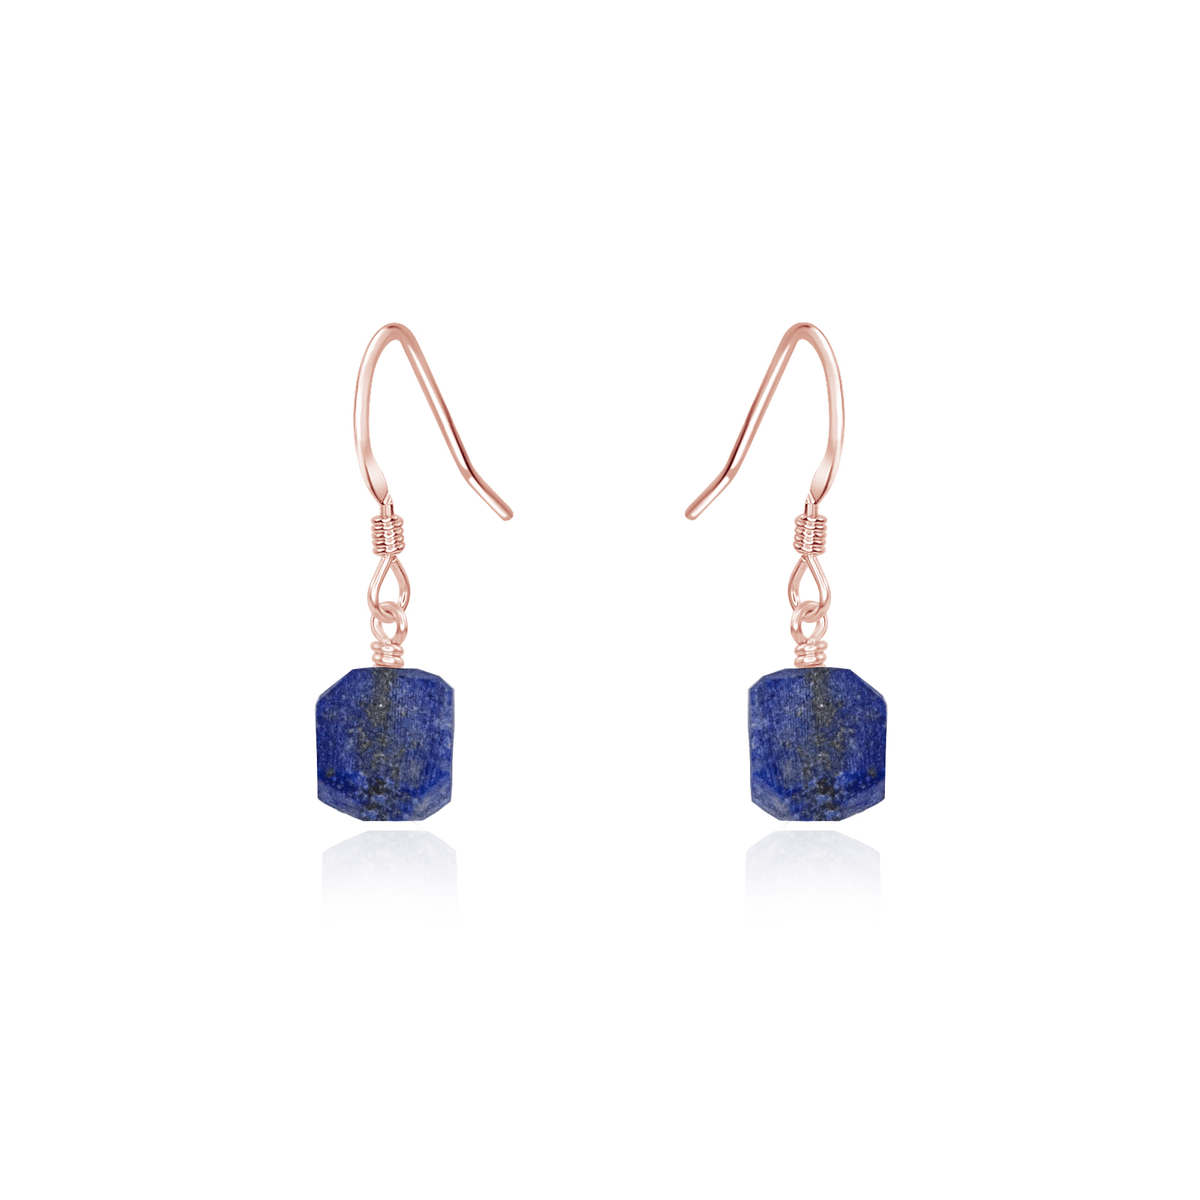 Raw Blue Lapis Lazuli Crystal Dangle Drop Earrings - Raw Blue Lapis Lazuli Crystal Dangle Drop Earrings - 14k Rose Gold Fill - Luna Tide Handmade Crystal Jewellery